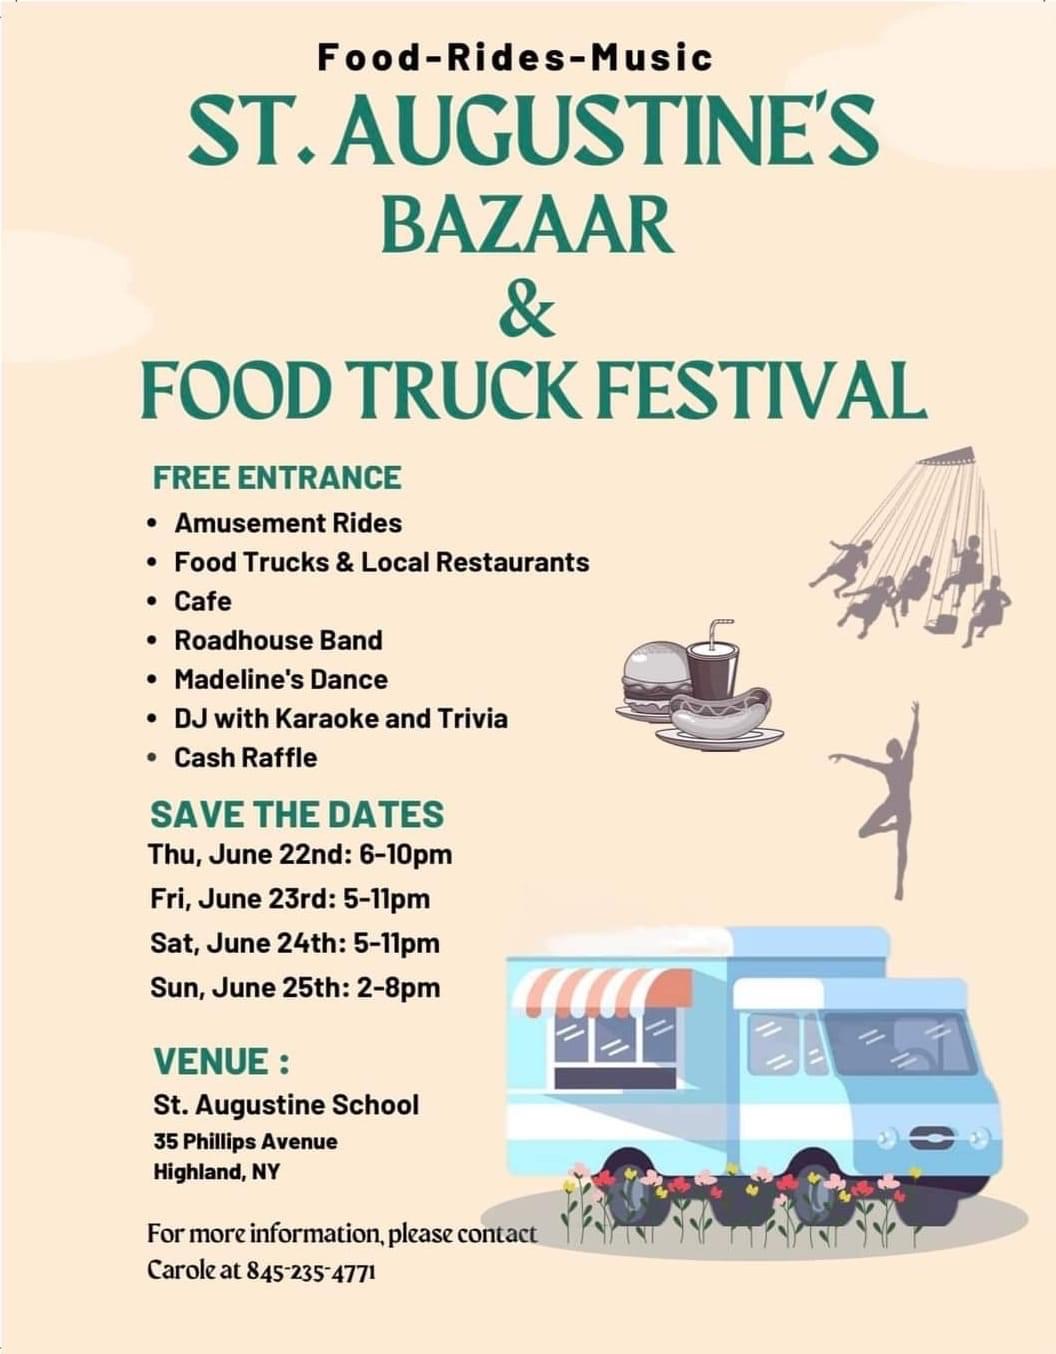 St. Augustine's Food Truck Bazaar